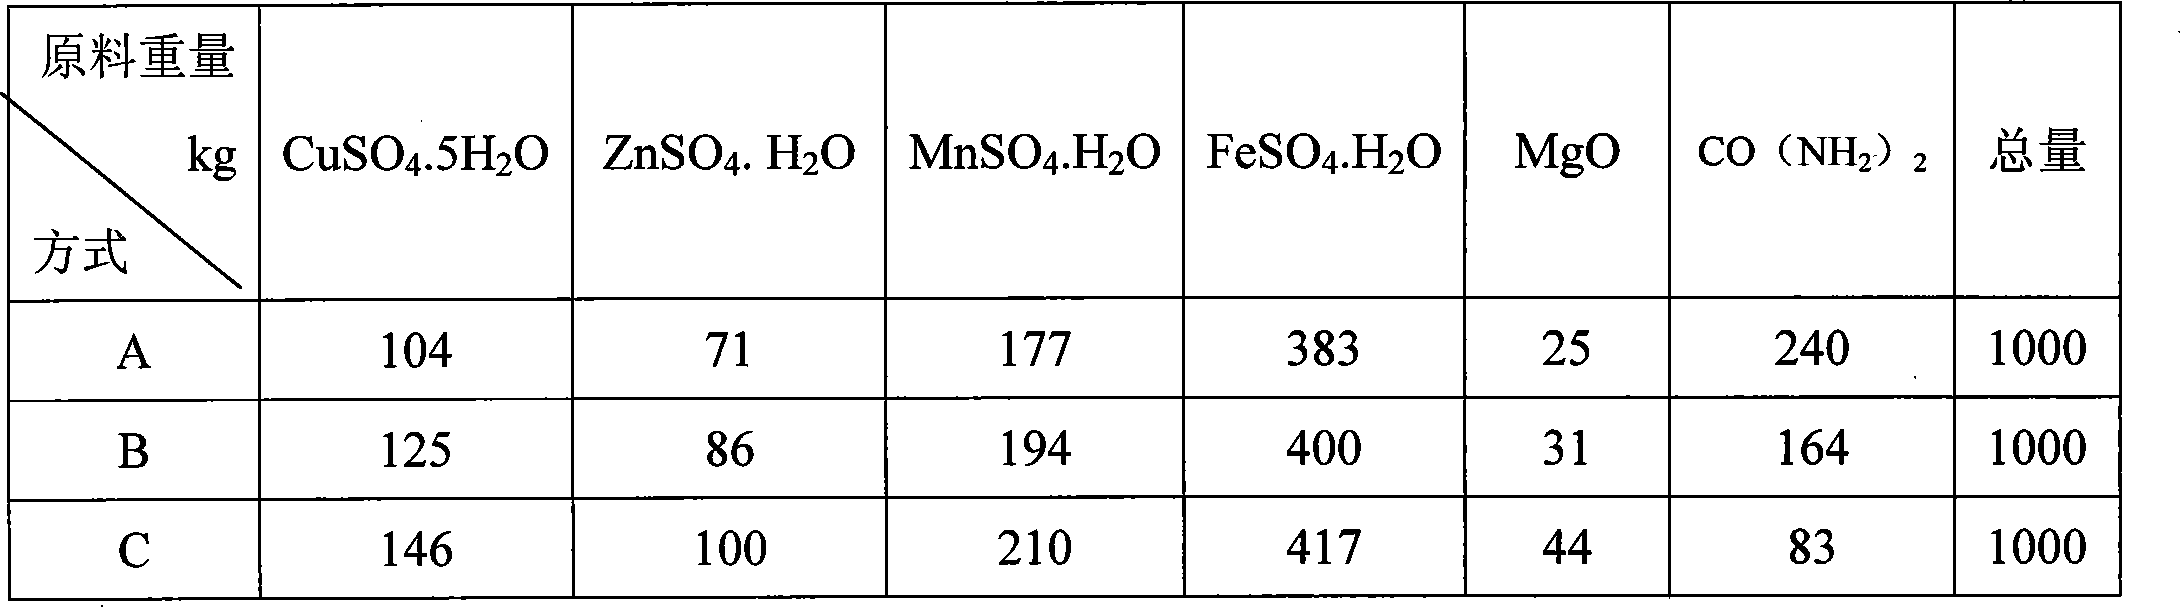 Compound fertilizer containing minor metallic element